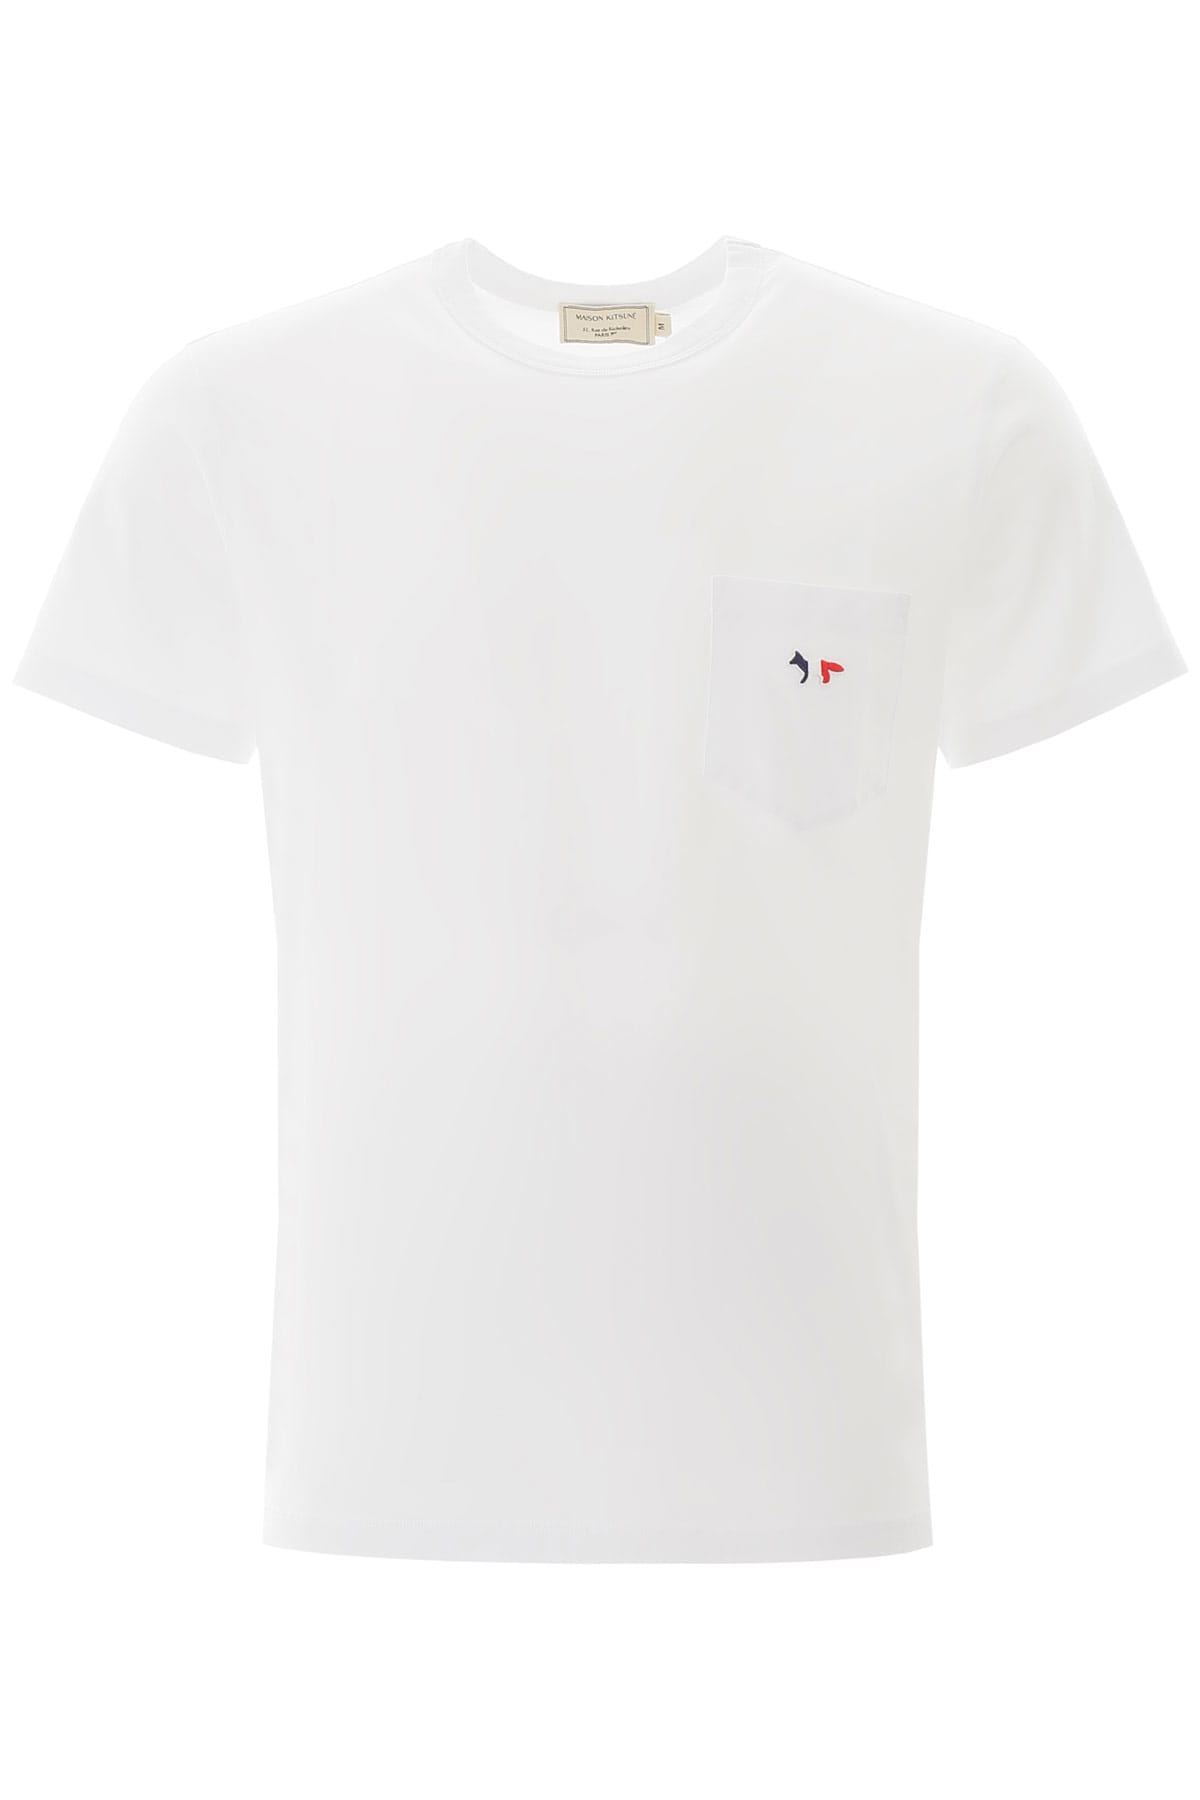 Maison Kitsuné T-shirt With Pocket And Tricolour Fox